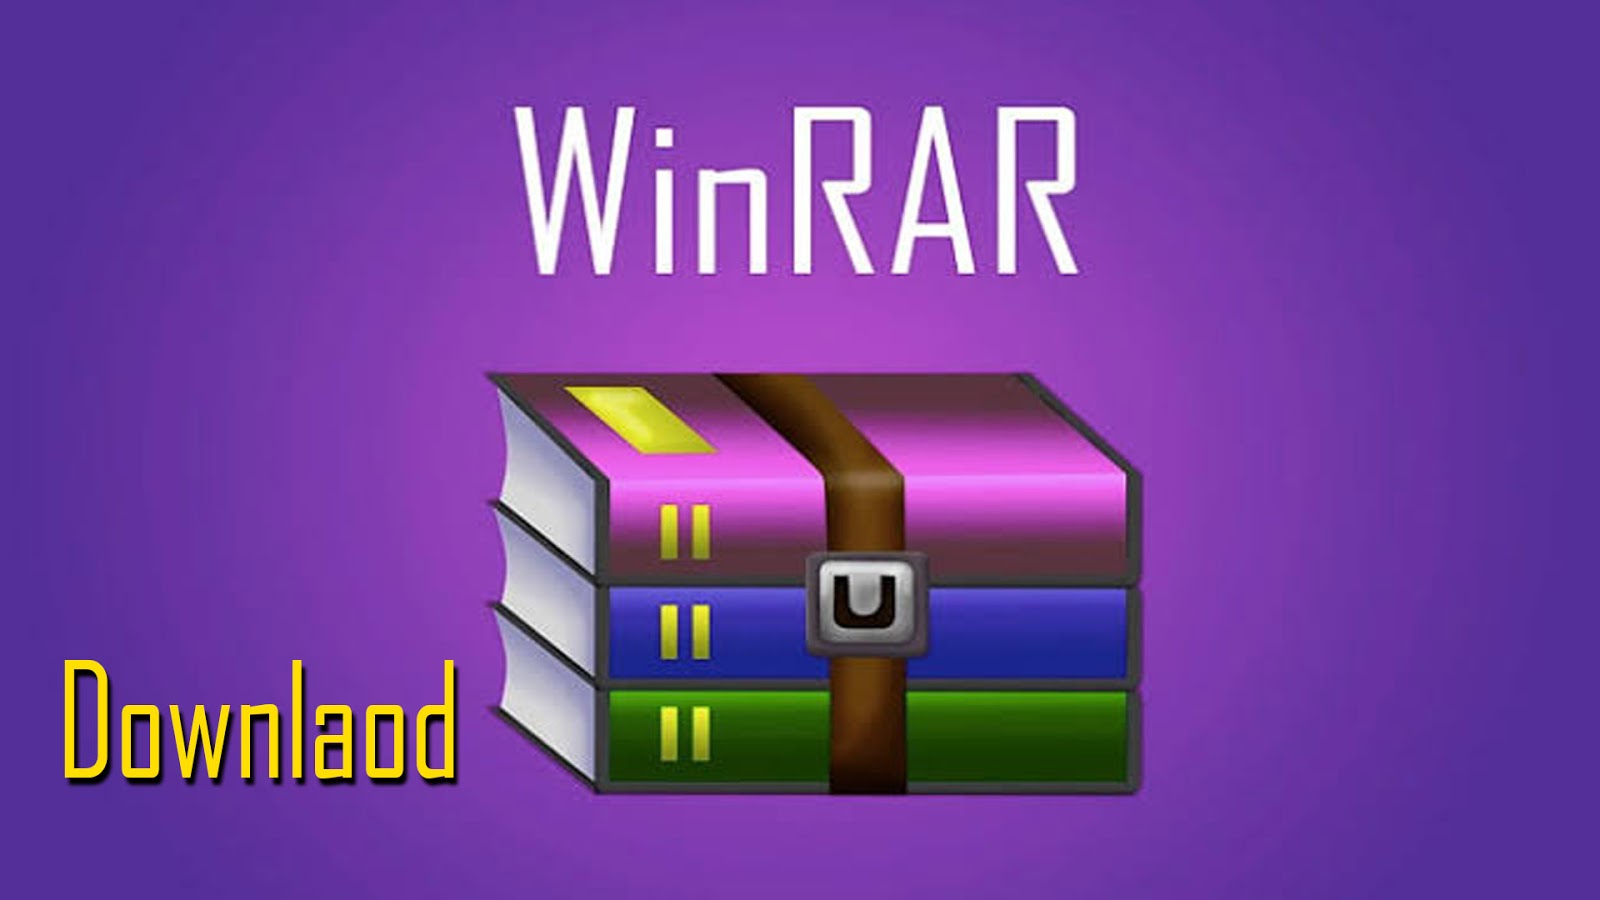 free winrar software download windows 7 64 bit